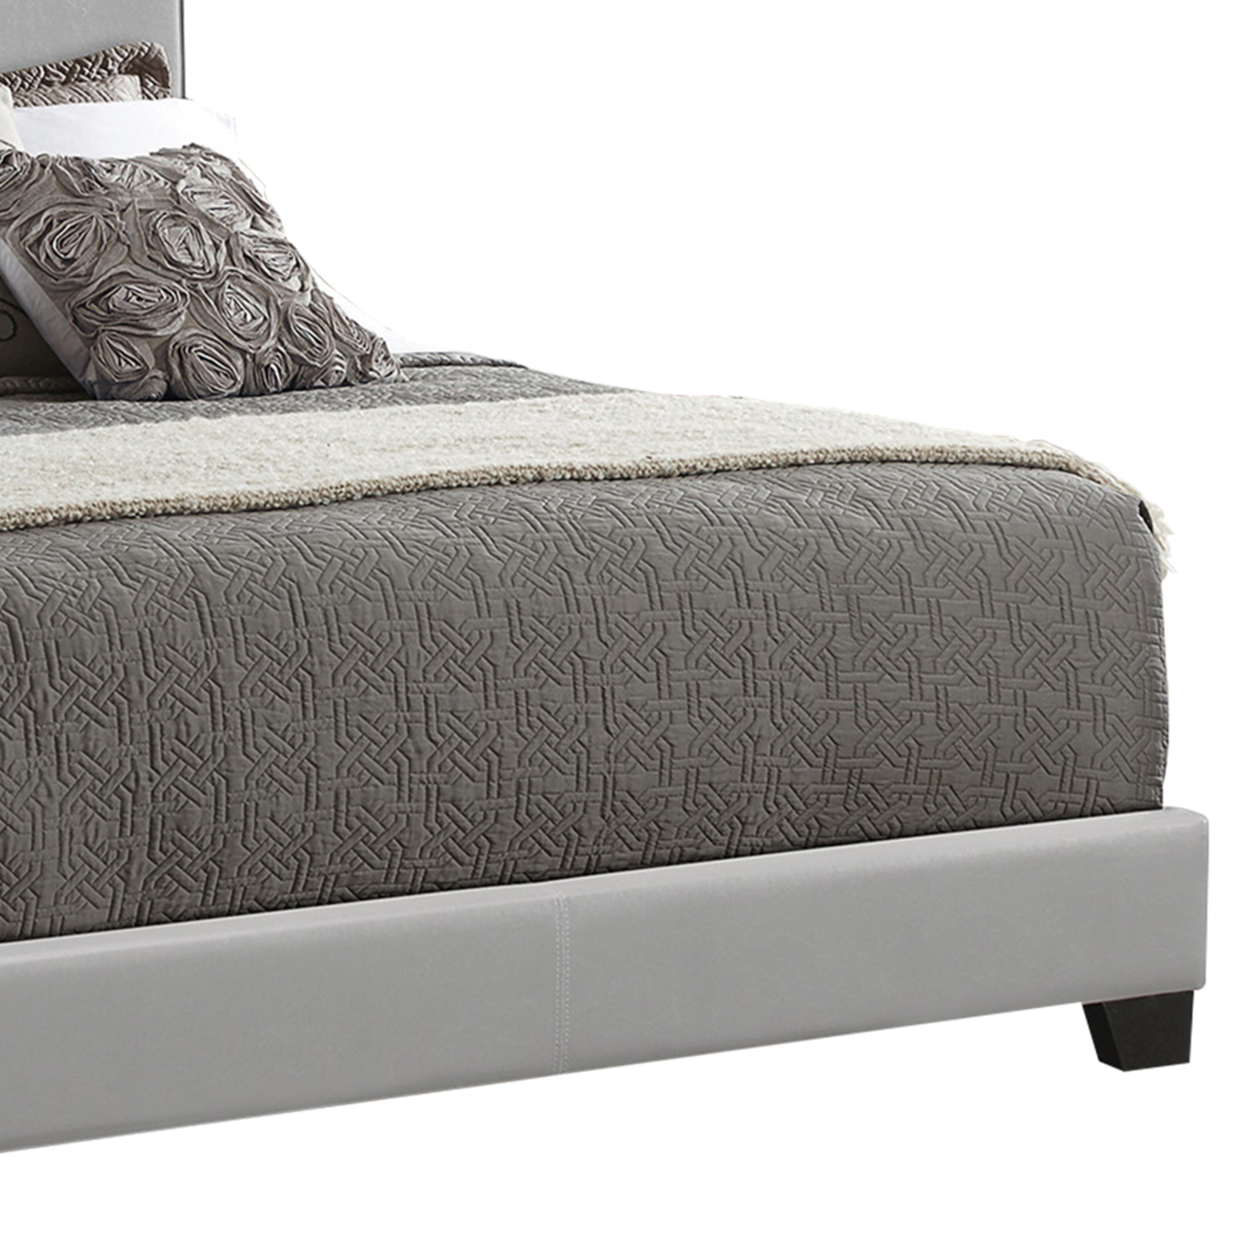 Leather Upholstered Queen Size Platform Bed, Gray- Saltoro Sherpi